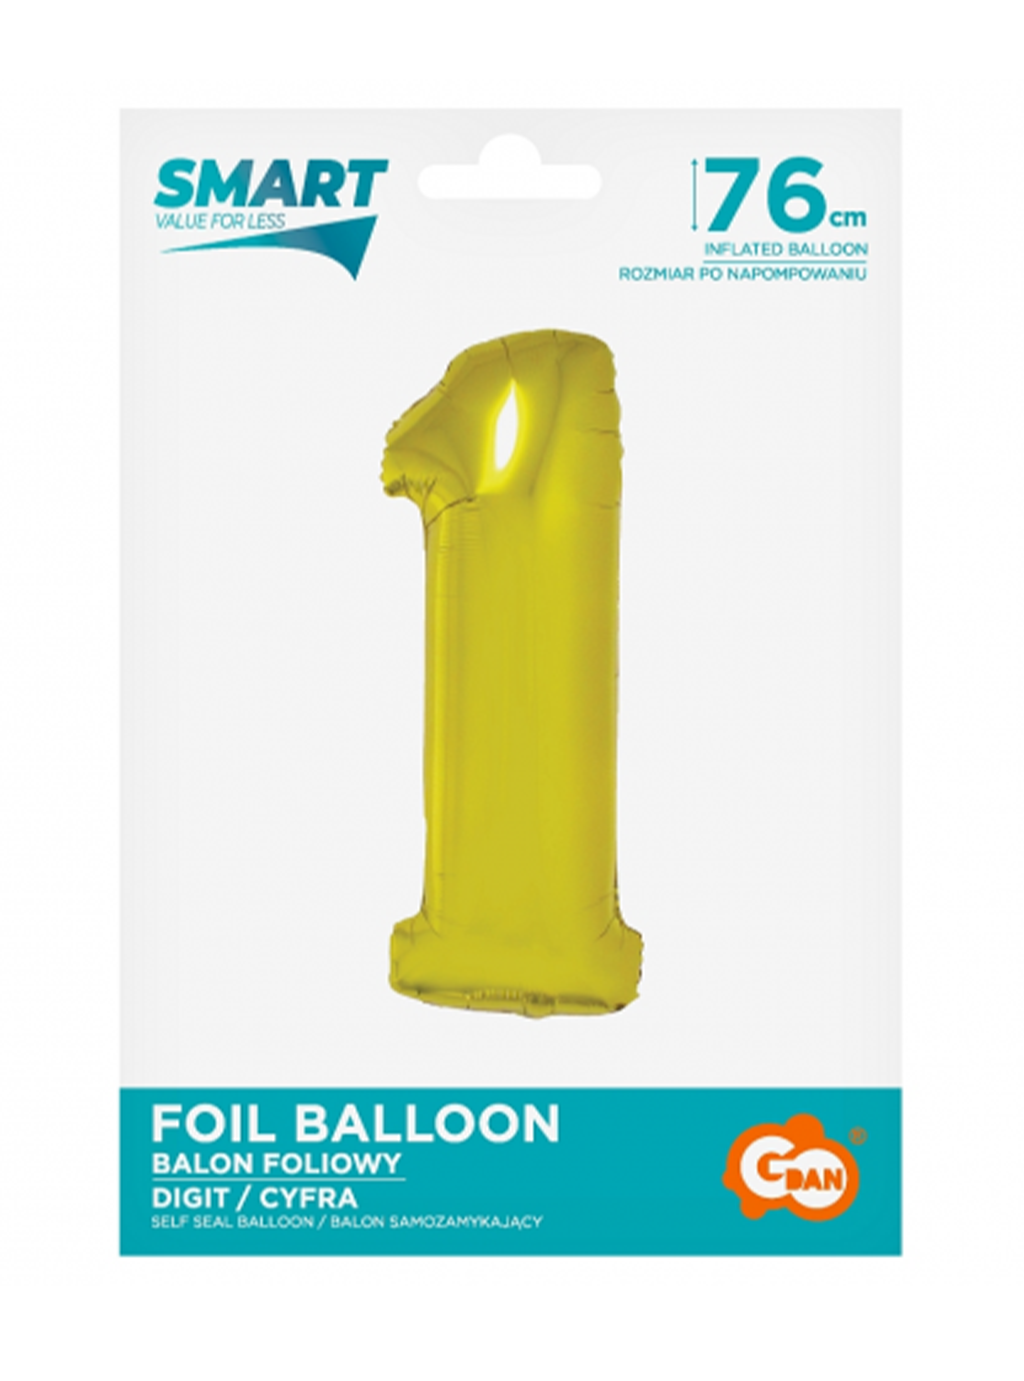 Zlatý balónek Smart s číslem "1" -76cm